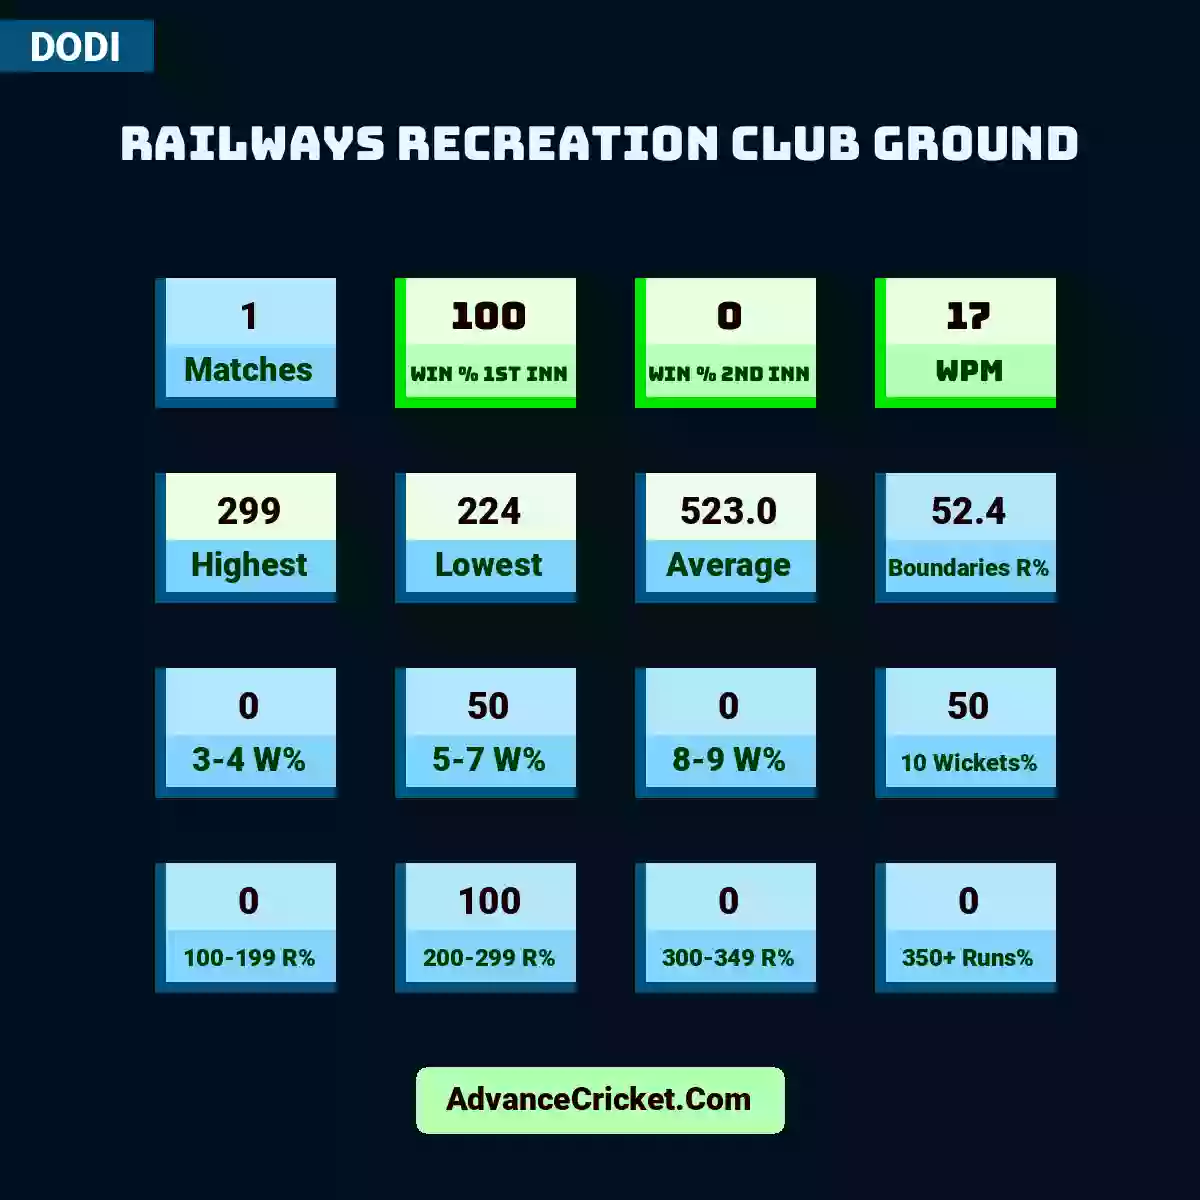 Image showing Railways Recreation Club Ground with Matches: 1, Win % 1st Inn: 100, Win % 2nd Inn: 0, WPM: 17, Highest: 299, Lowest: 224, Average: 523.0, Boundaries R%: 52.4, 3-4 W%: 0, 5-7 W%: 50, 8-9 W%: 0, 10 Wickets%: 50, 100-199 R%: 0, 200-299 R%: 100, 300-349 R%: 0, 350+ Runs%: 0.